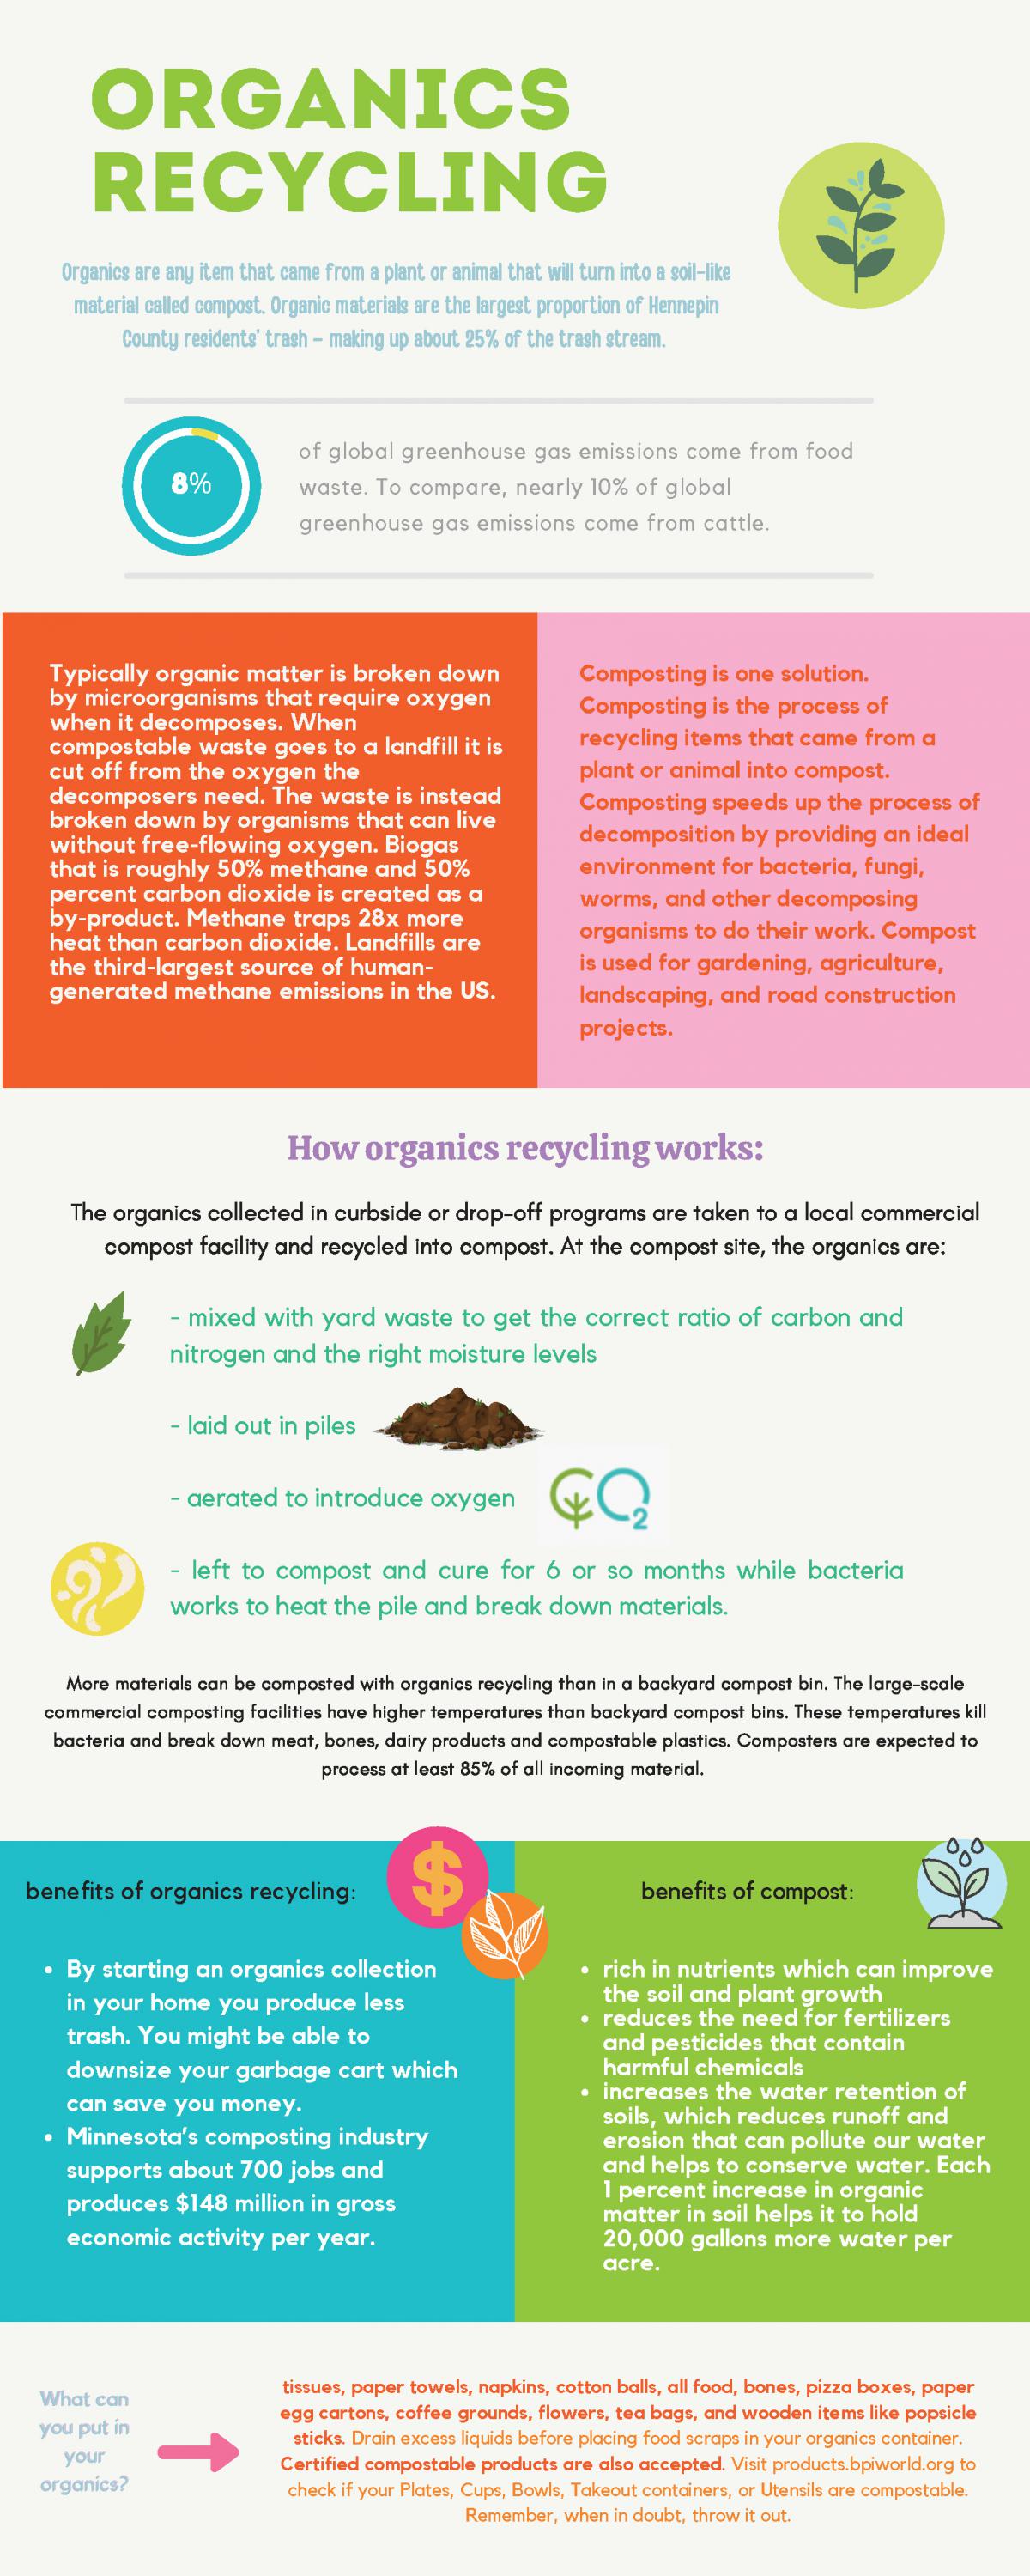 Organics recycling infographic